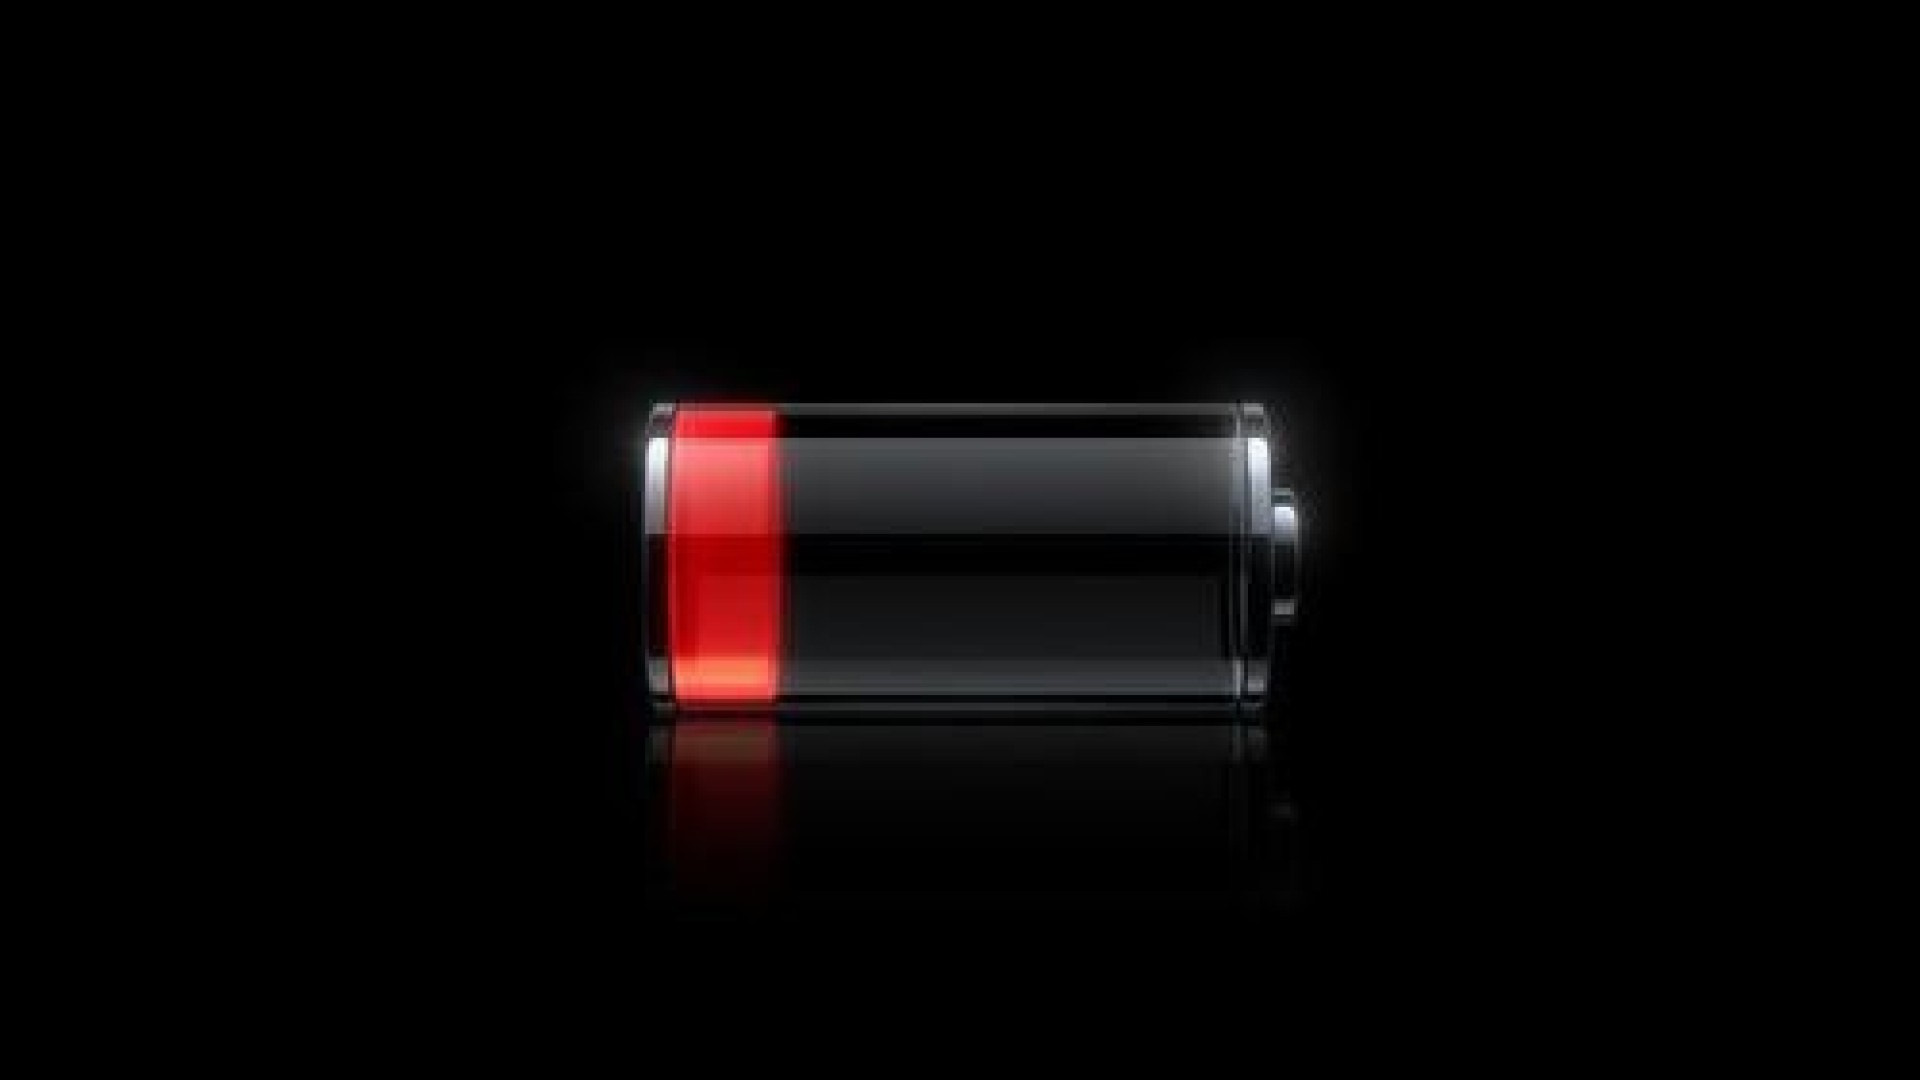 Low battery power